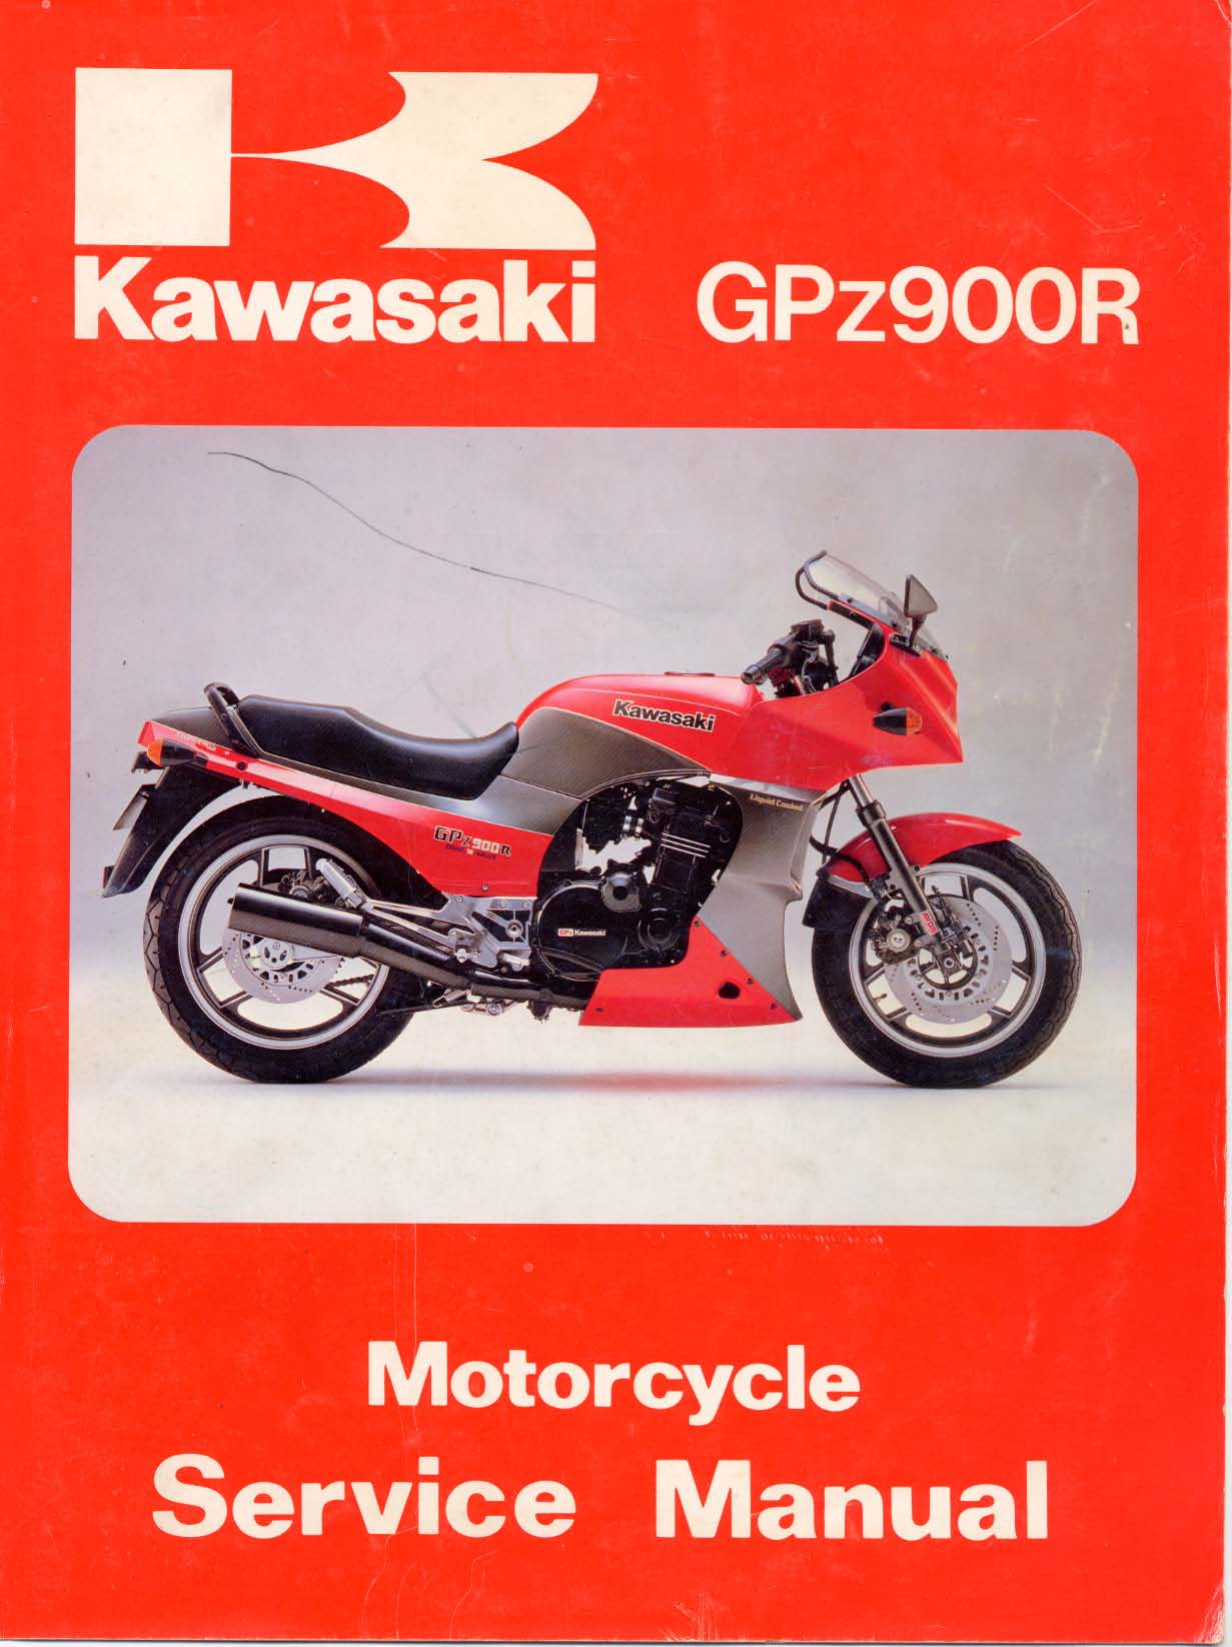 Kawasaki GPz900R service manual Preview image 1